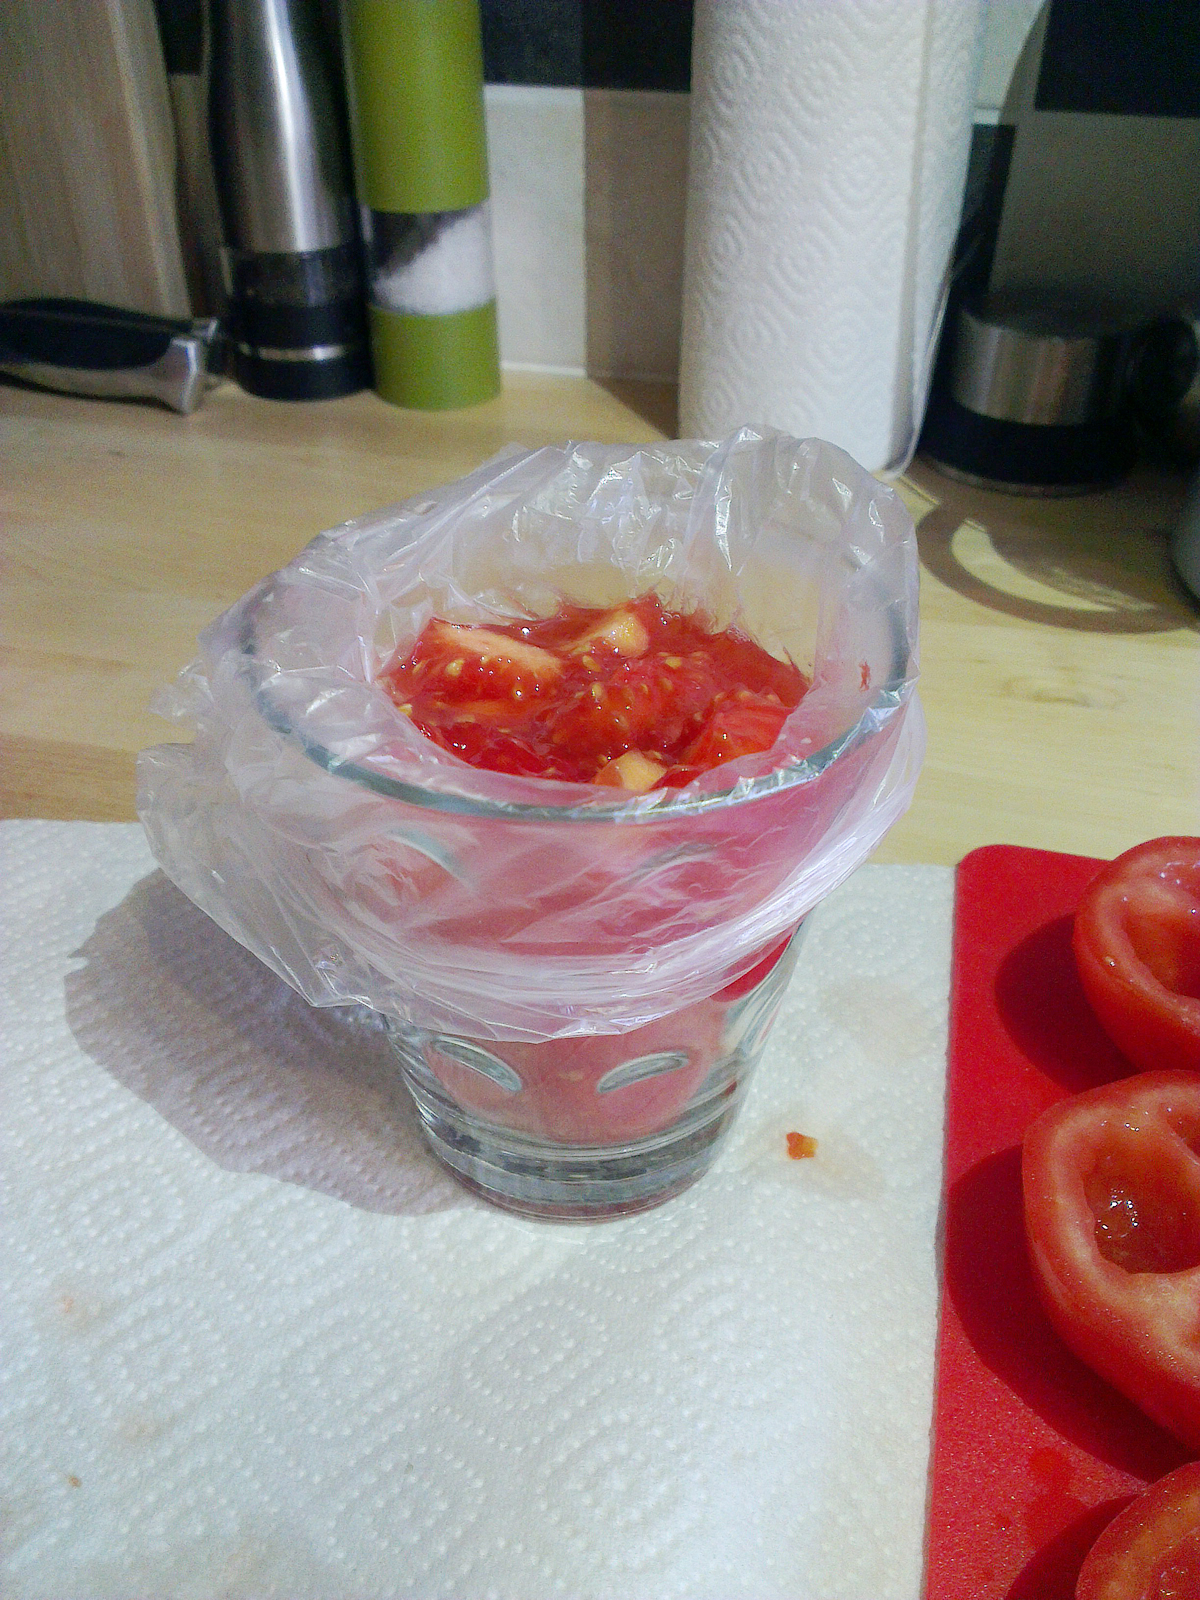 Tomaten ontpitten zonder te knoeien